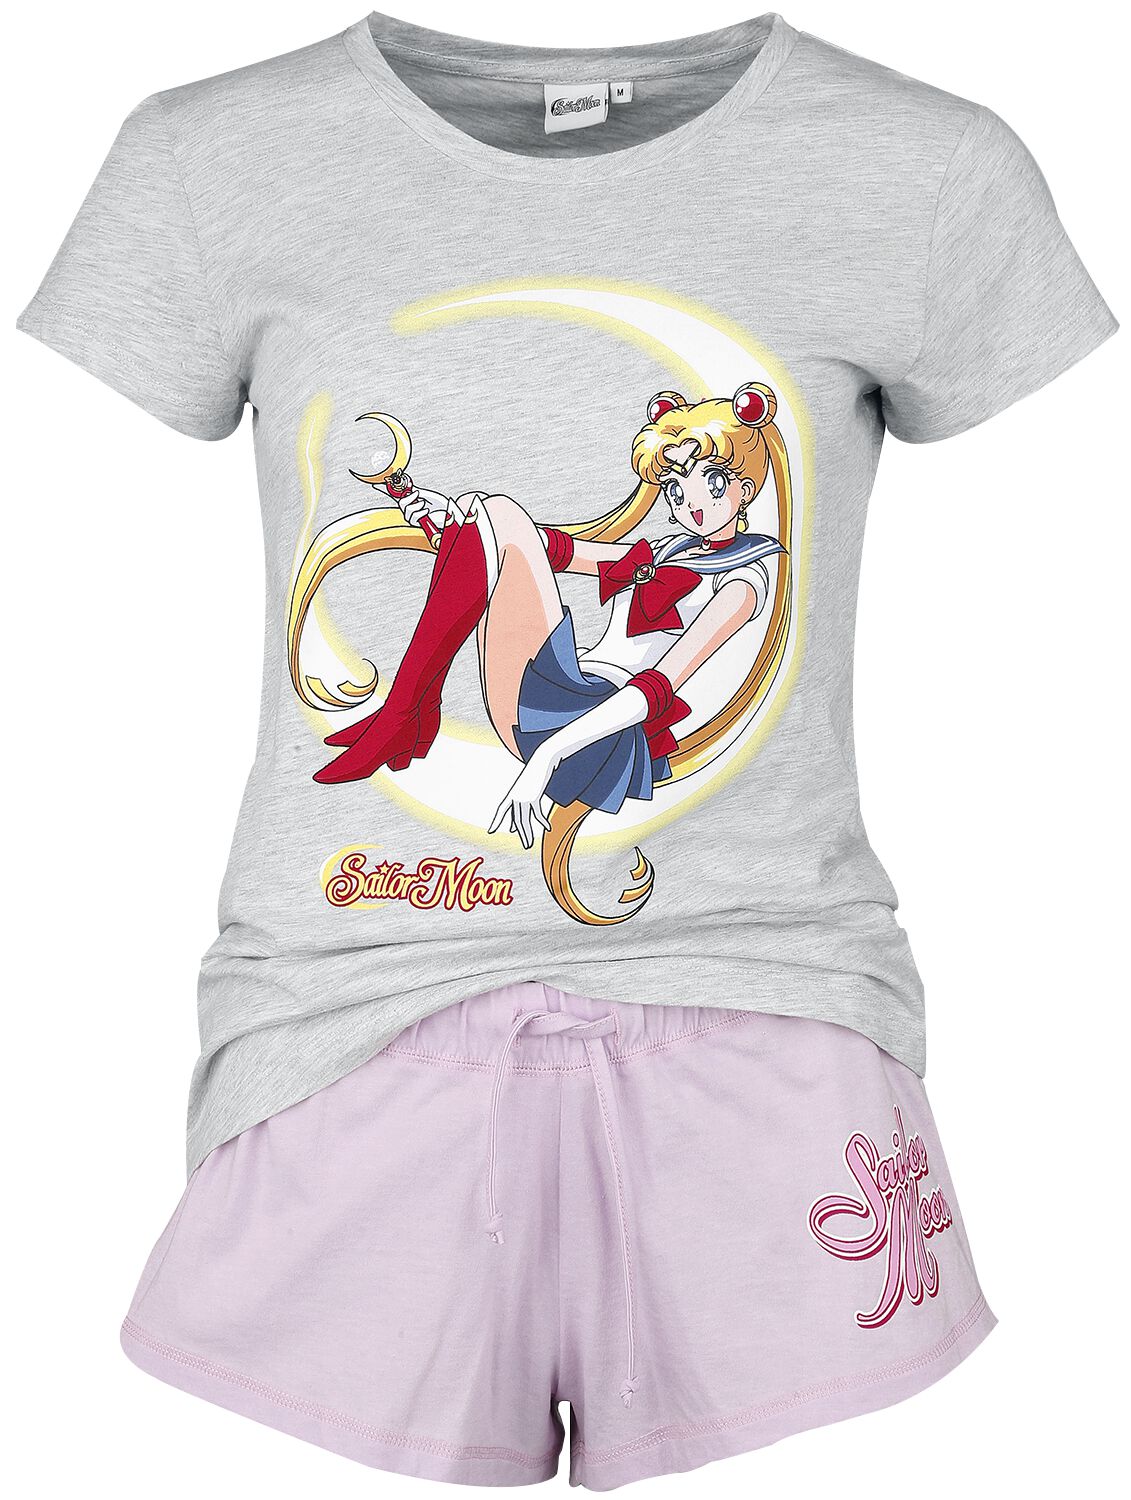 Anime Fun T-Shirt Trousers Pajama Set Shop Now